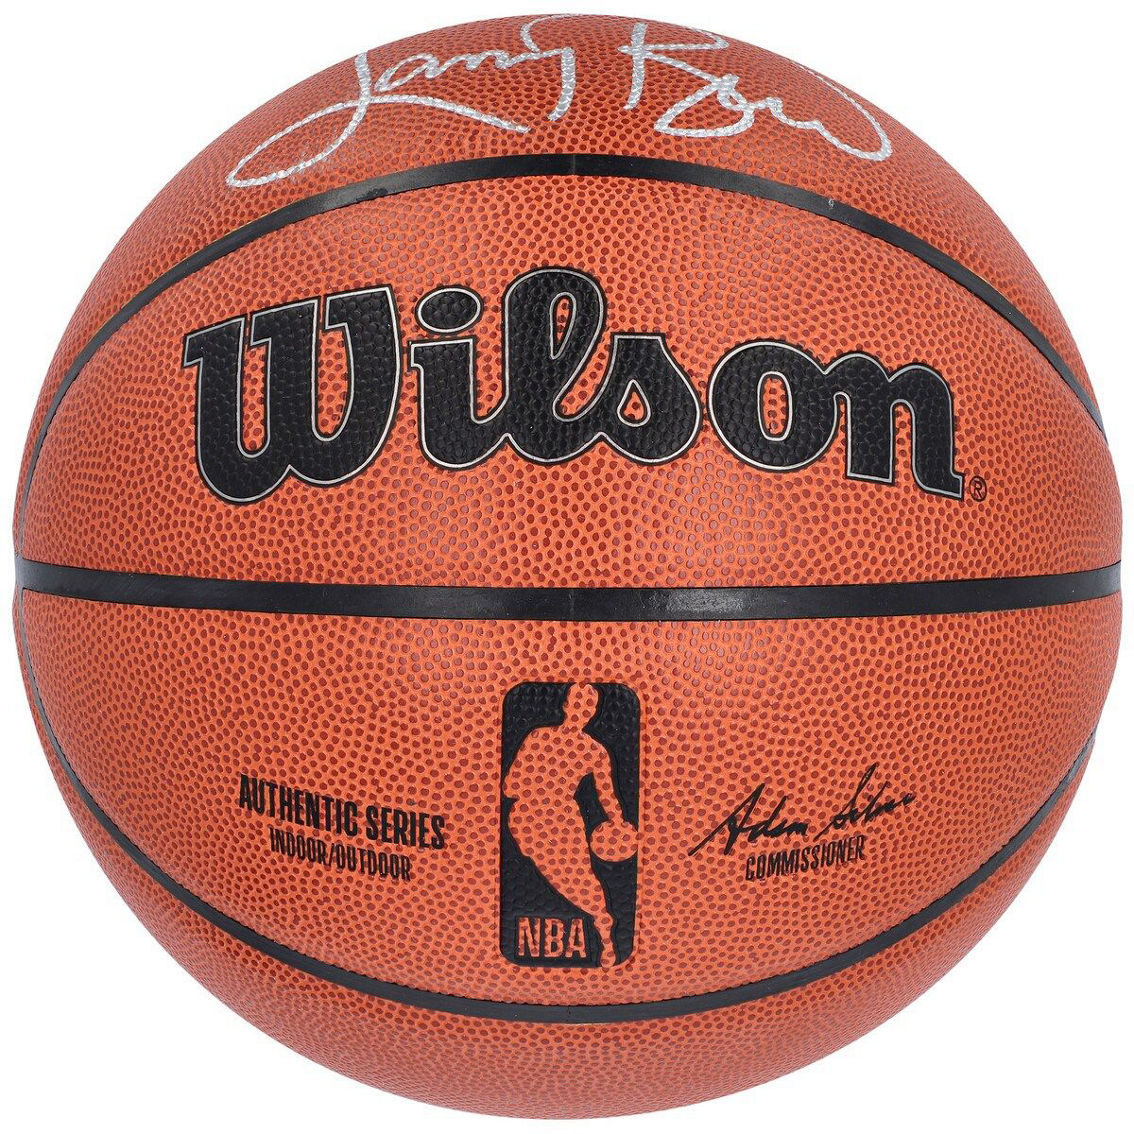 Fanatics Authentic Larry Bird Boston Celtics Autographed Wilson Authentic Series Indoor/Outdoor Basketball - Image 3 of 3